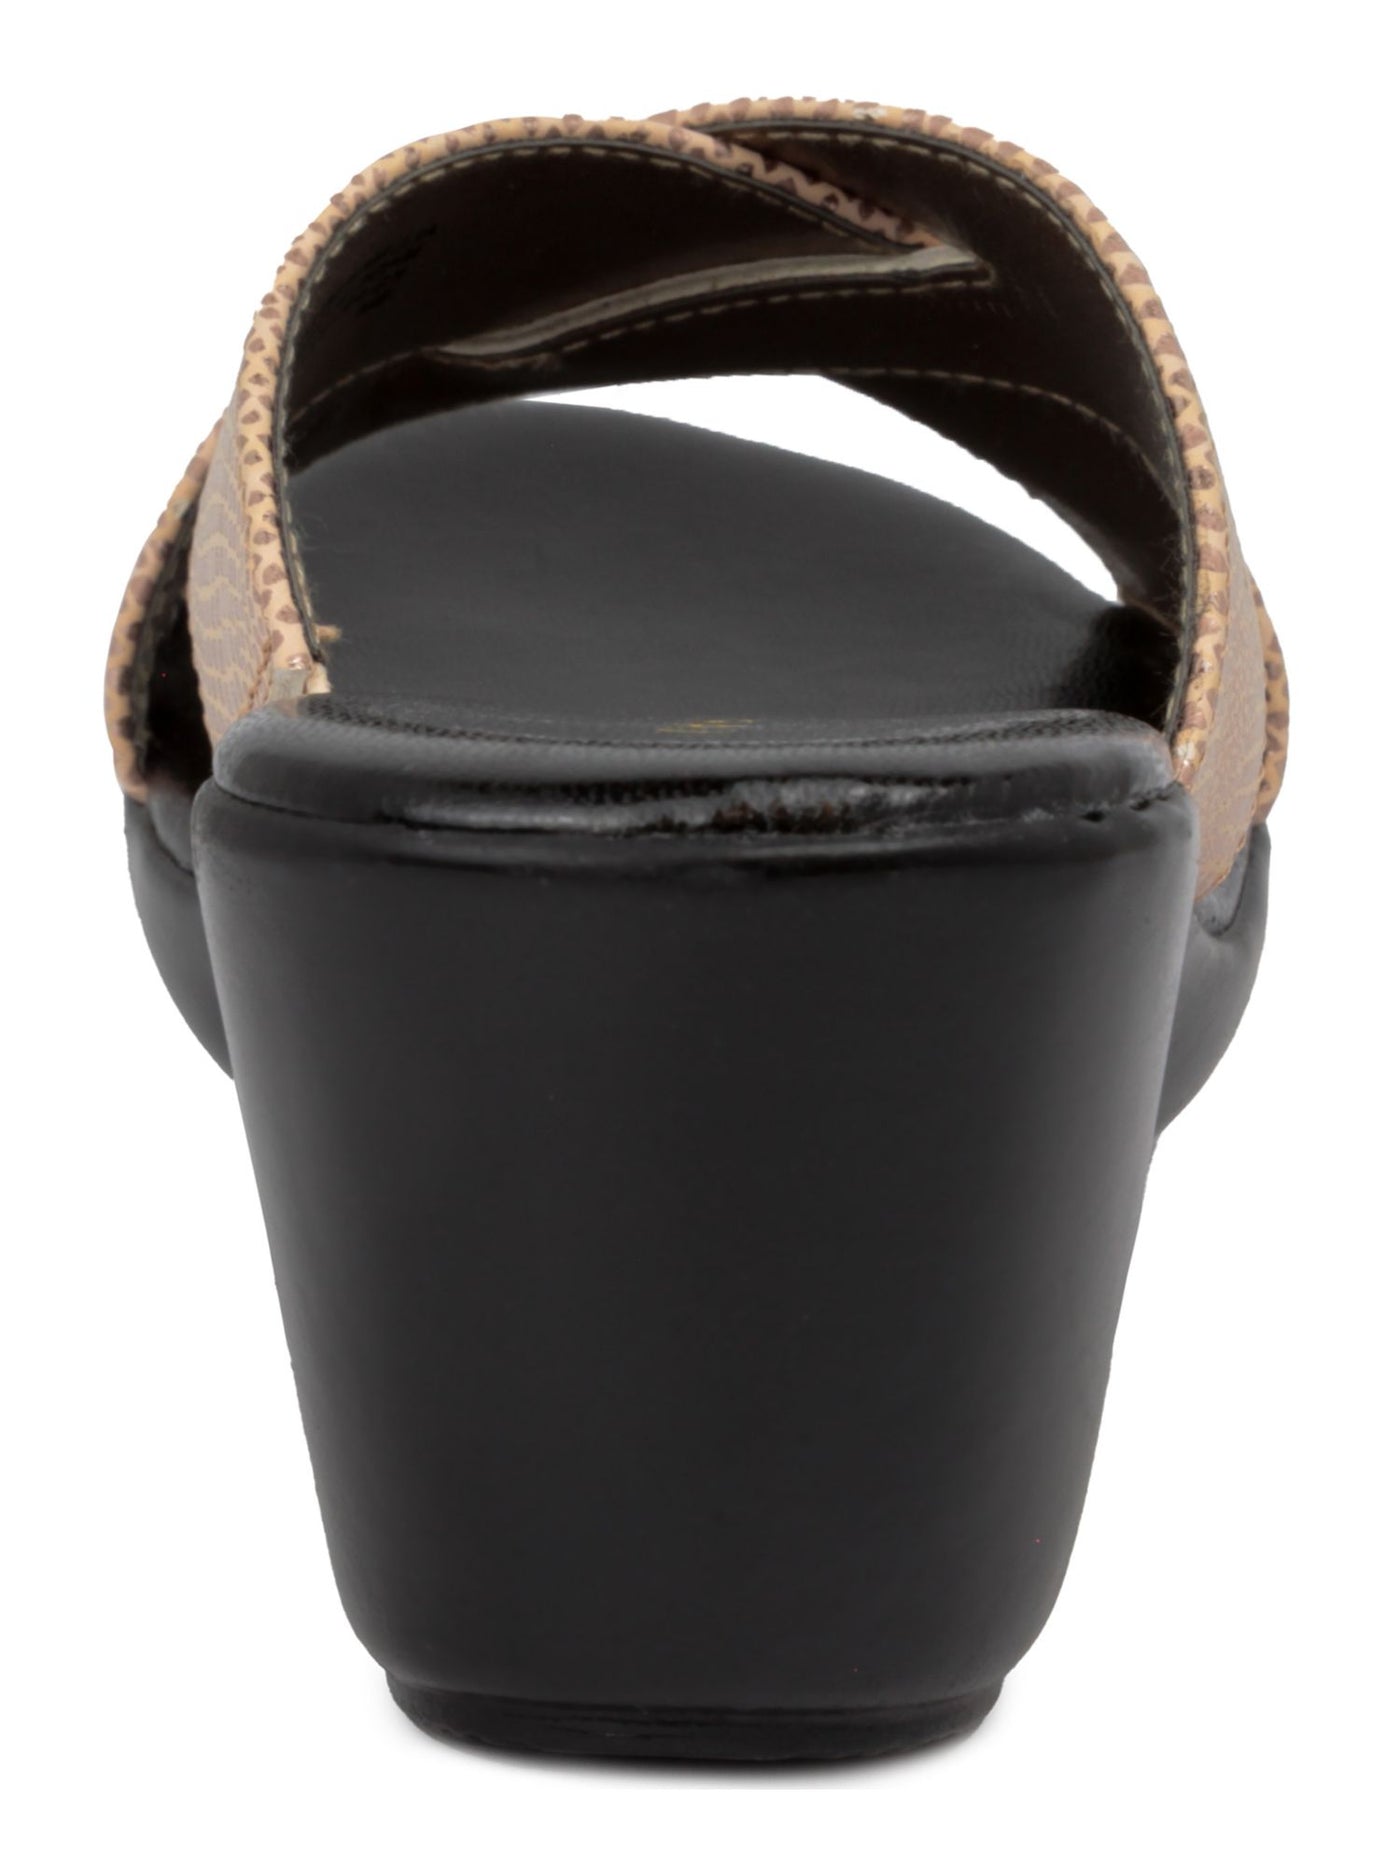 KAREN SCOTT Womens Black Crisscross Straps Comfort Petraa Almond Toe Wedge Slip On Slide Sandals Shoes 9.5 M